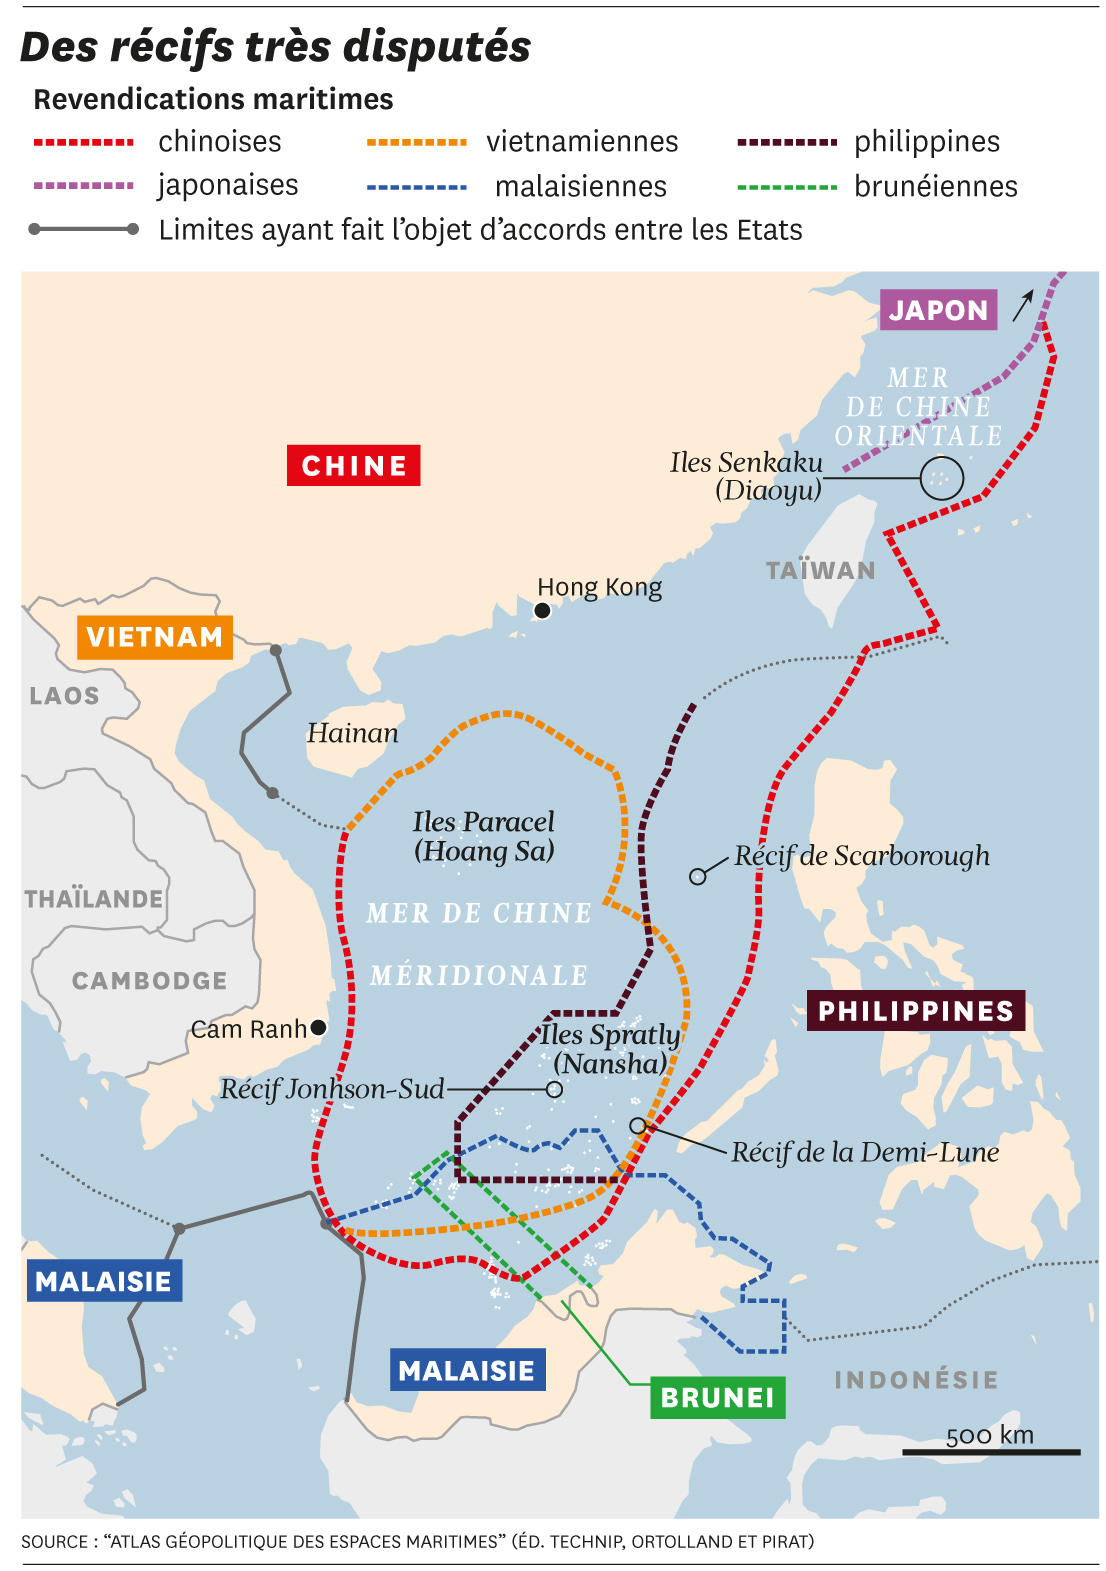 South China Sea - maritime claims • Map • PopulationData.net